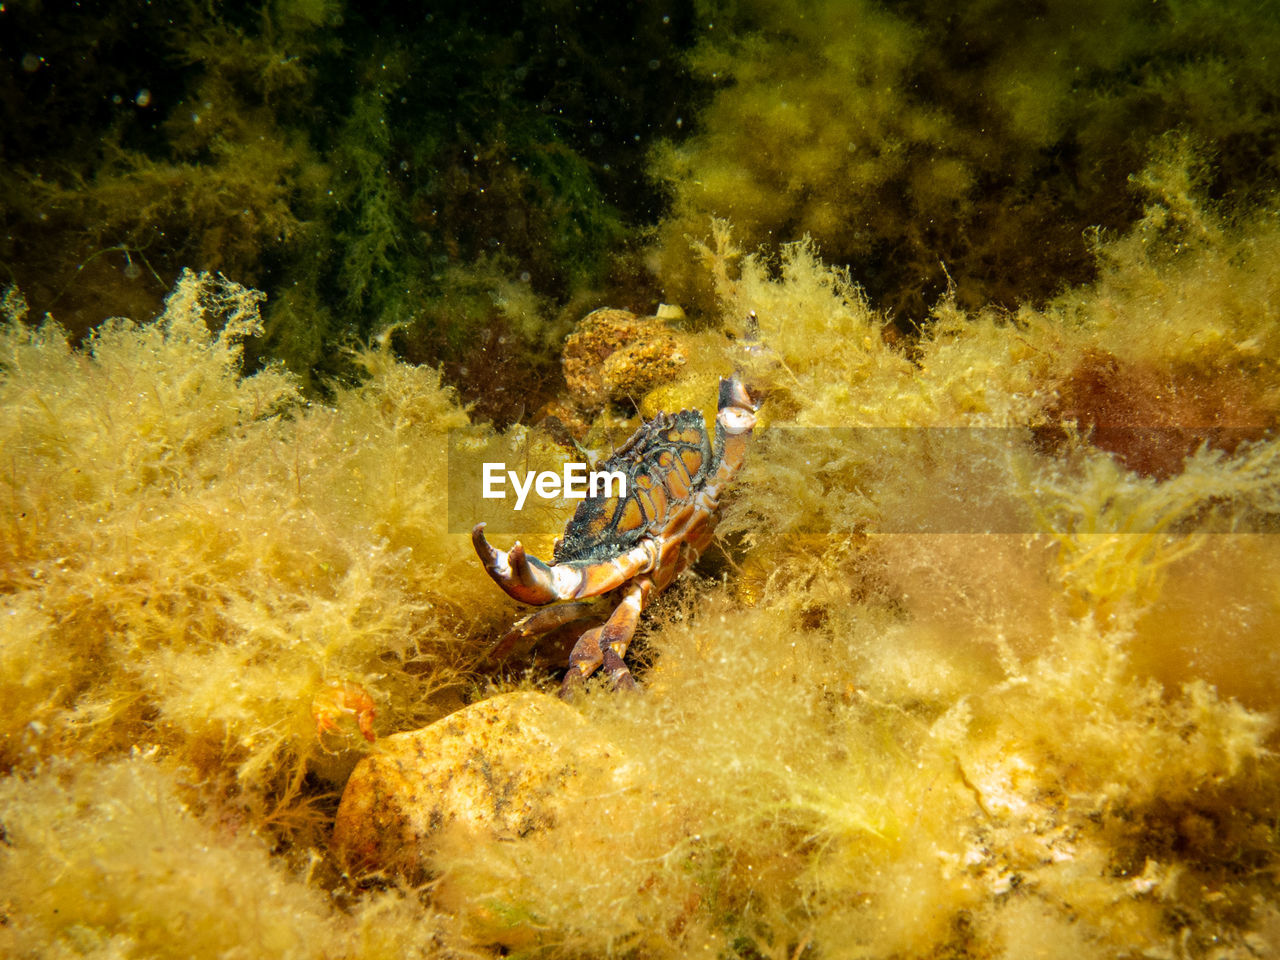 An orange crab in yellow seaweed. scuba diving in oresund, the water between sweden and denmark